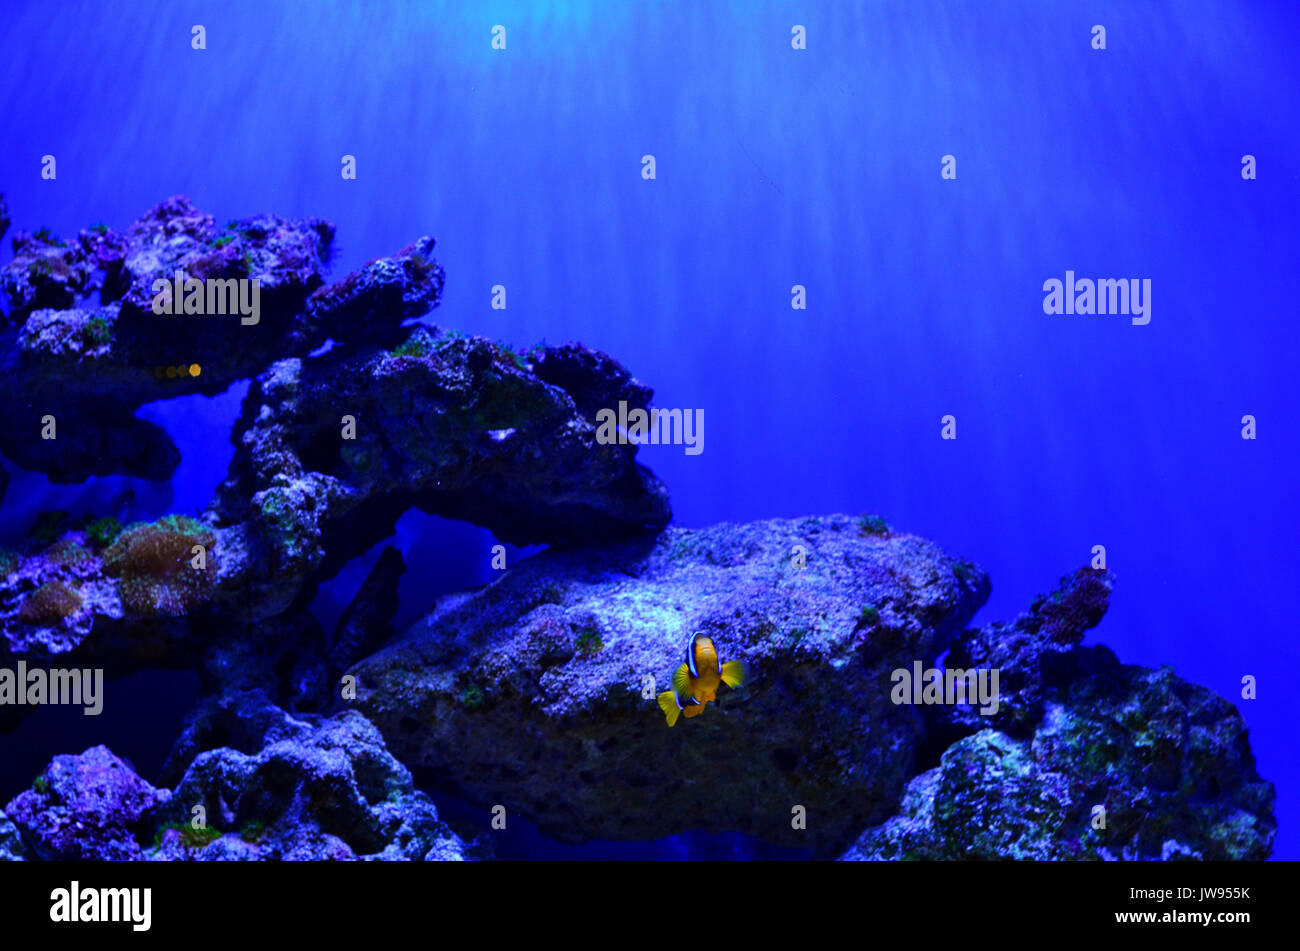 The clown fish floats near the rocks at a depth. Blue background, horizontal photo Stock Photo